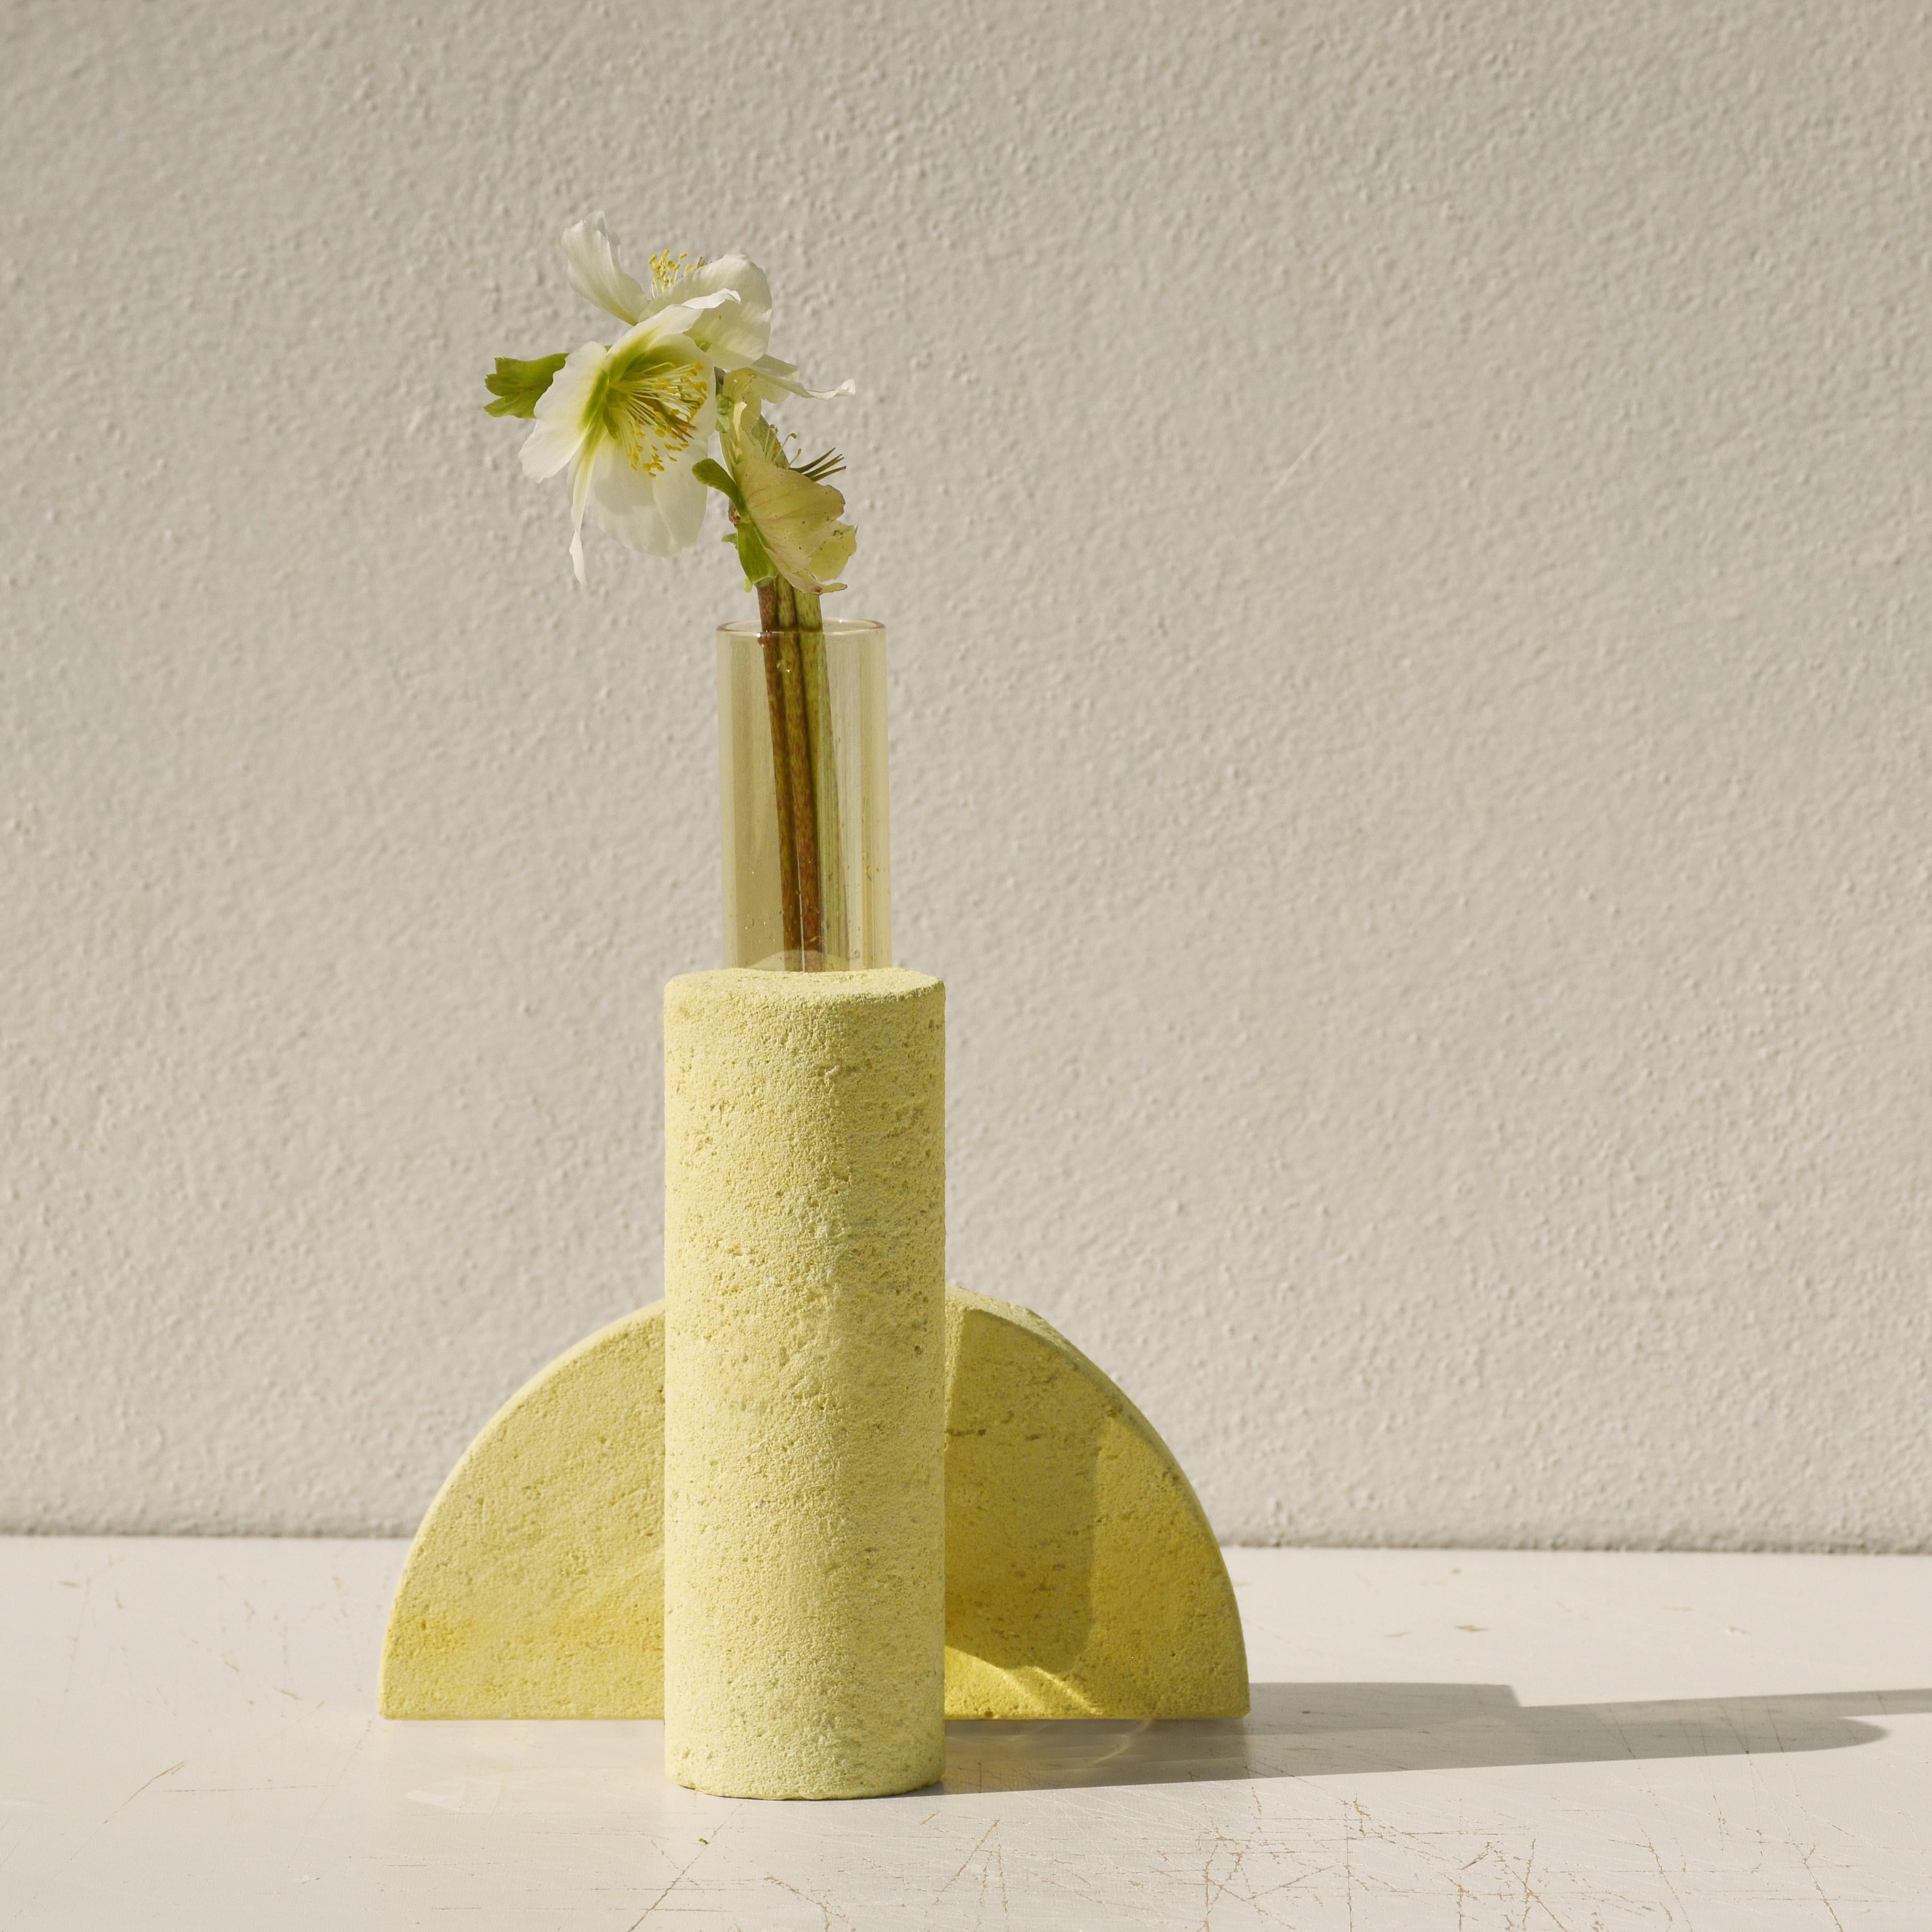 Hand-Crafted Yellow-Yellow Cochlea Della Metamorfosi 1 Soils Edition Vase by Coki Barbieri For Sale